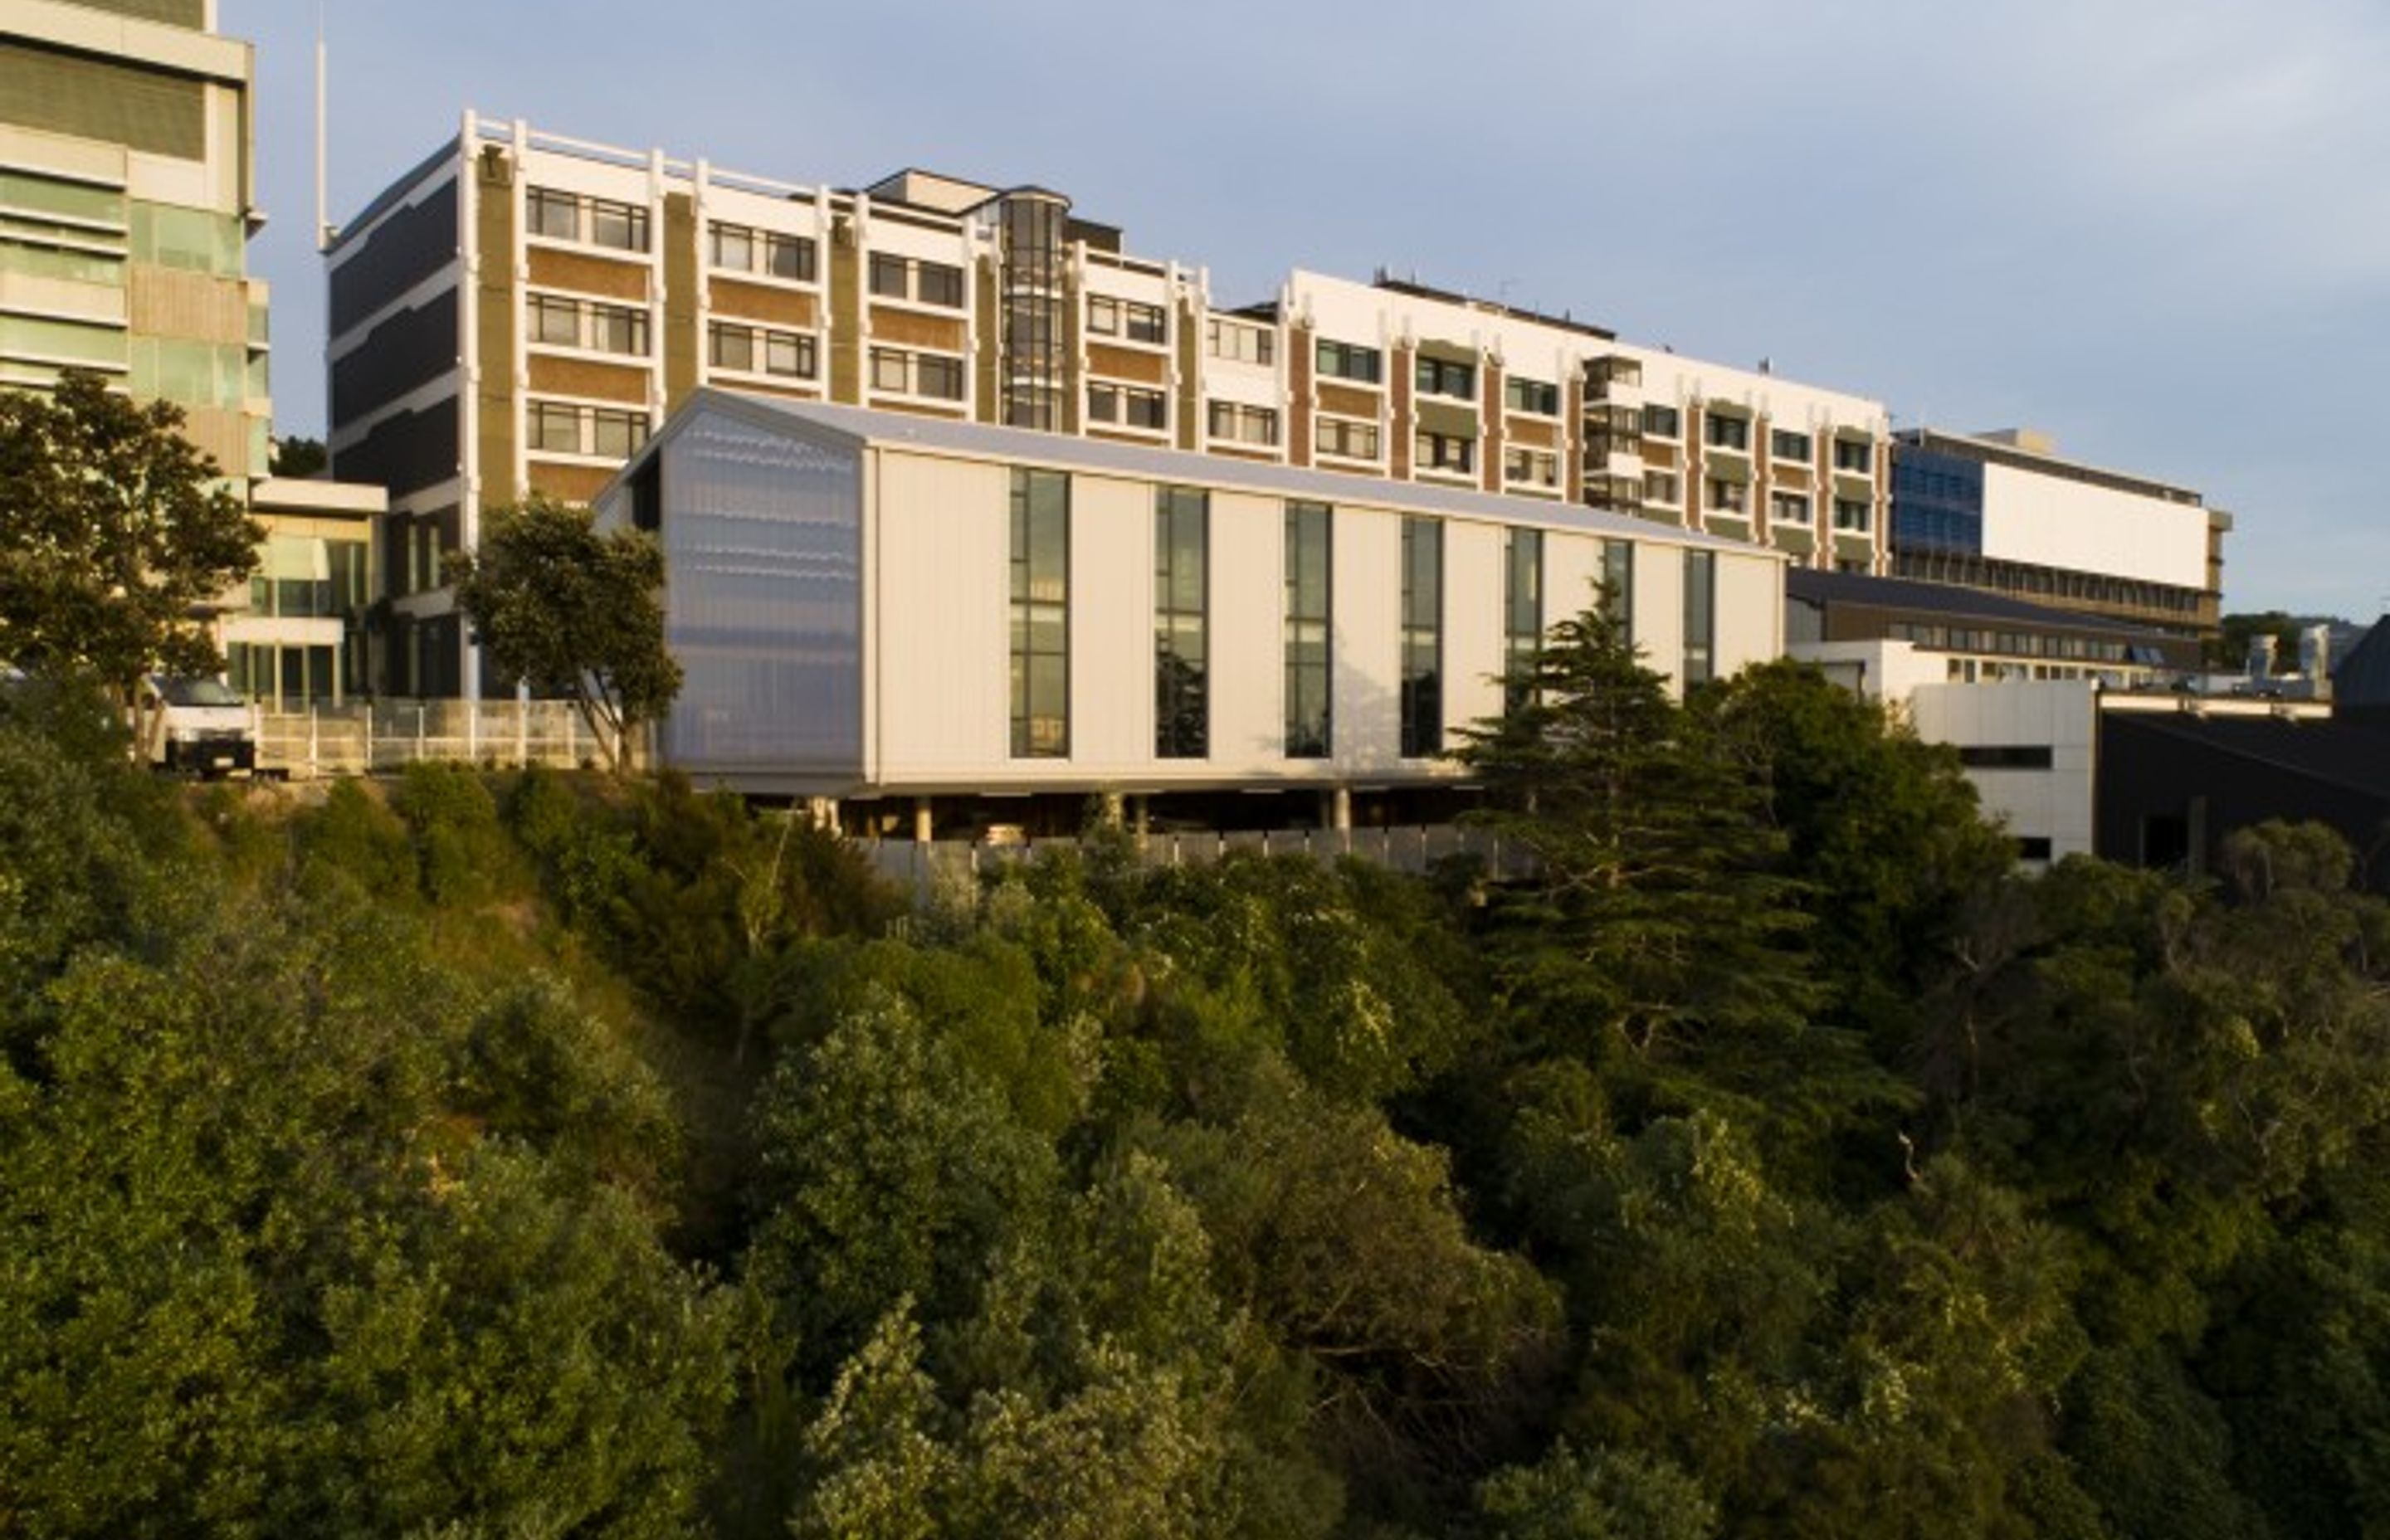 Maru, Victoria University of Wellington